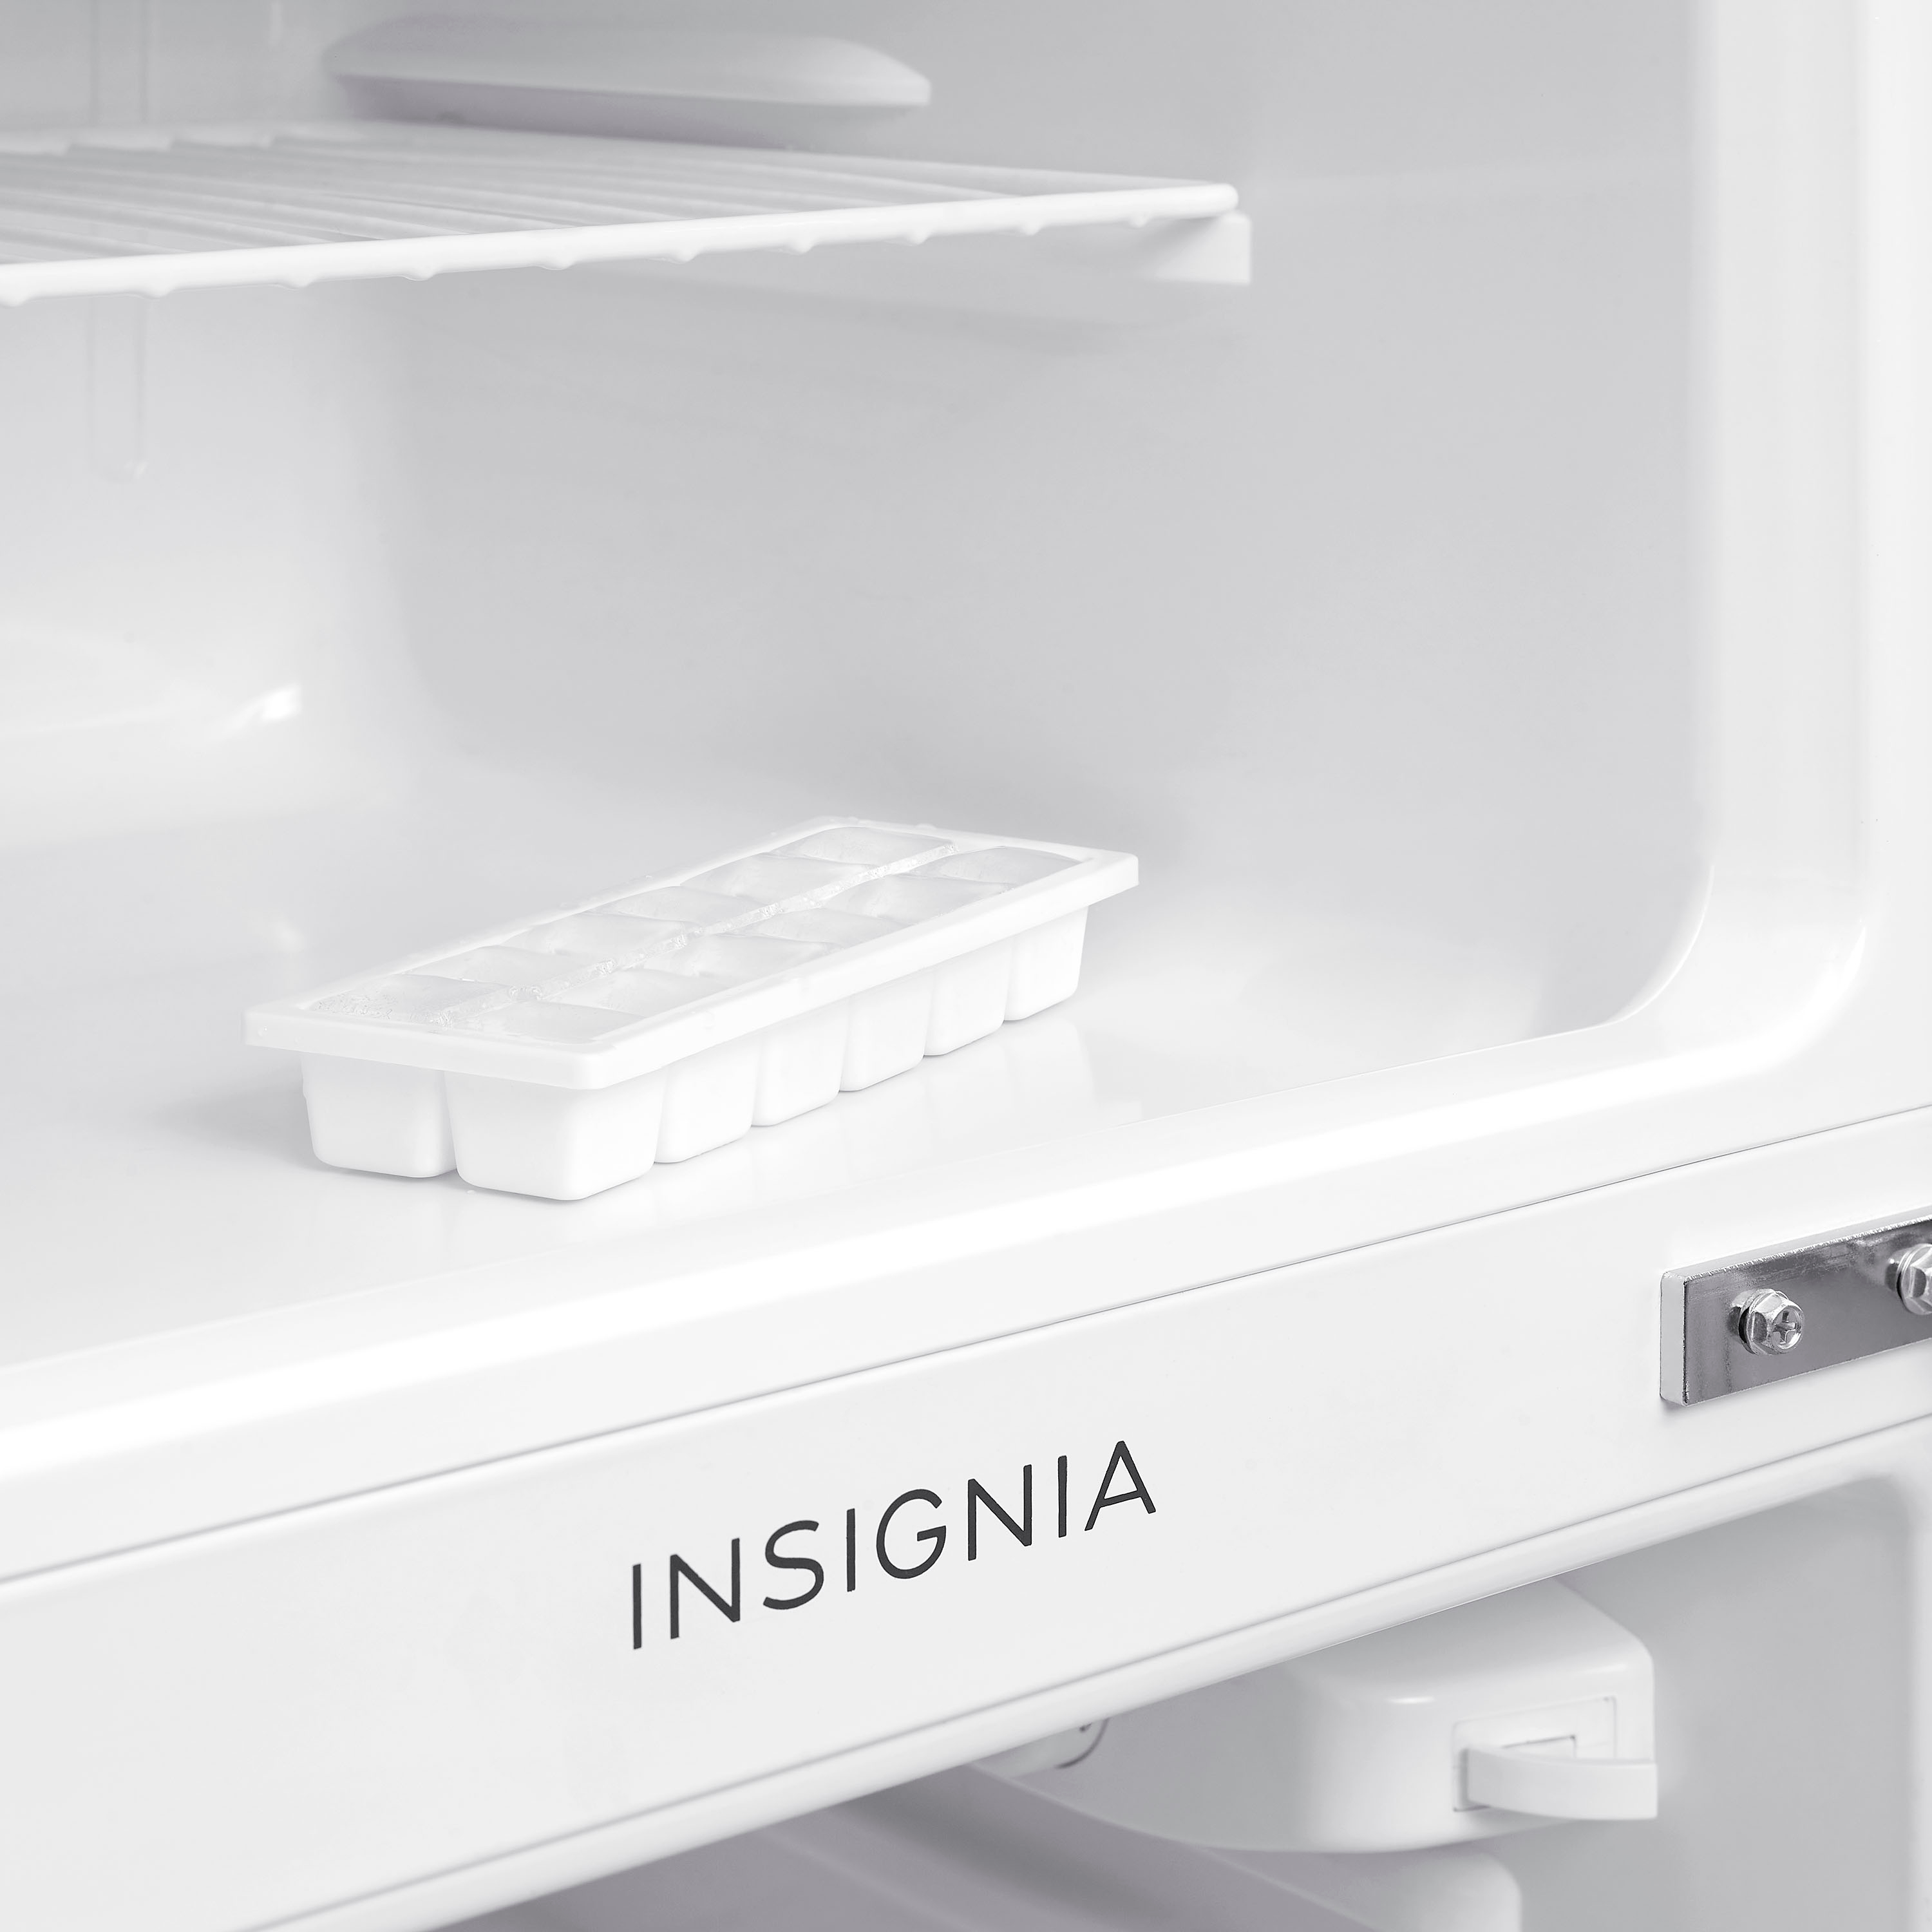 Insignia™ 4.5 Cu. Ft. Retro Mini Fridge with Top Freezer Mint NS-CFR45M3 -  Best Buy